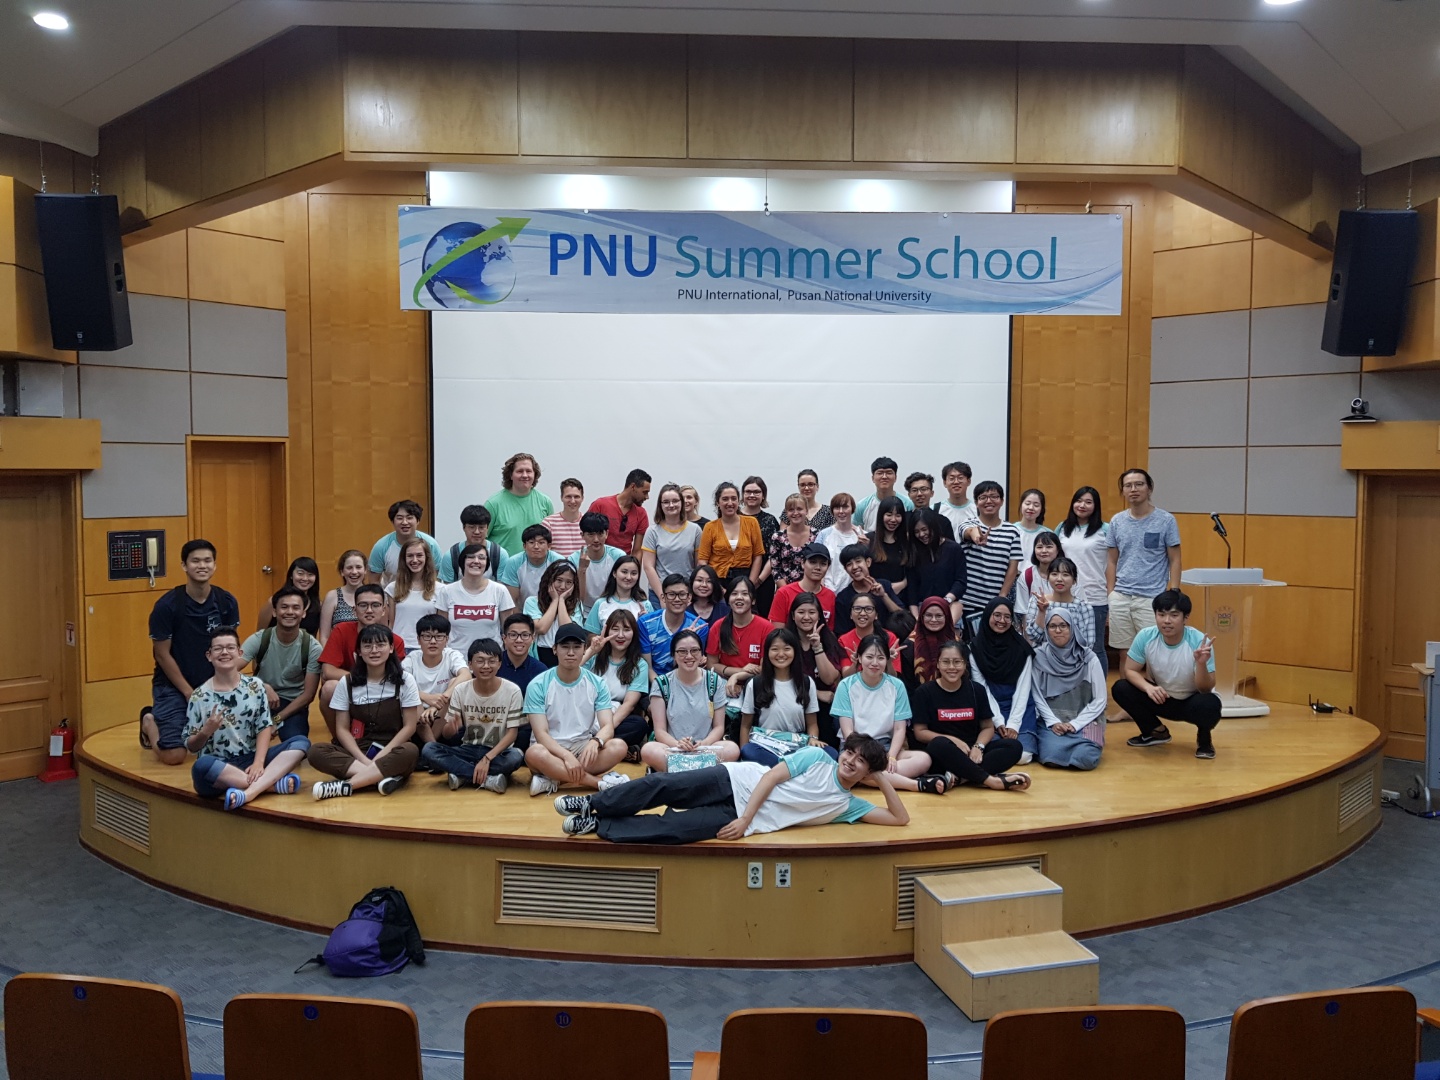 2018 PNU Summer School Orientation (2).jpg